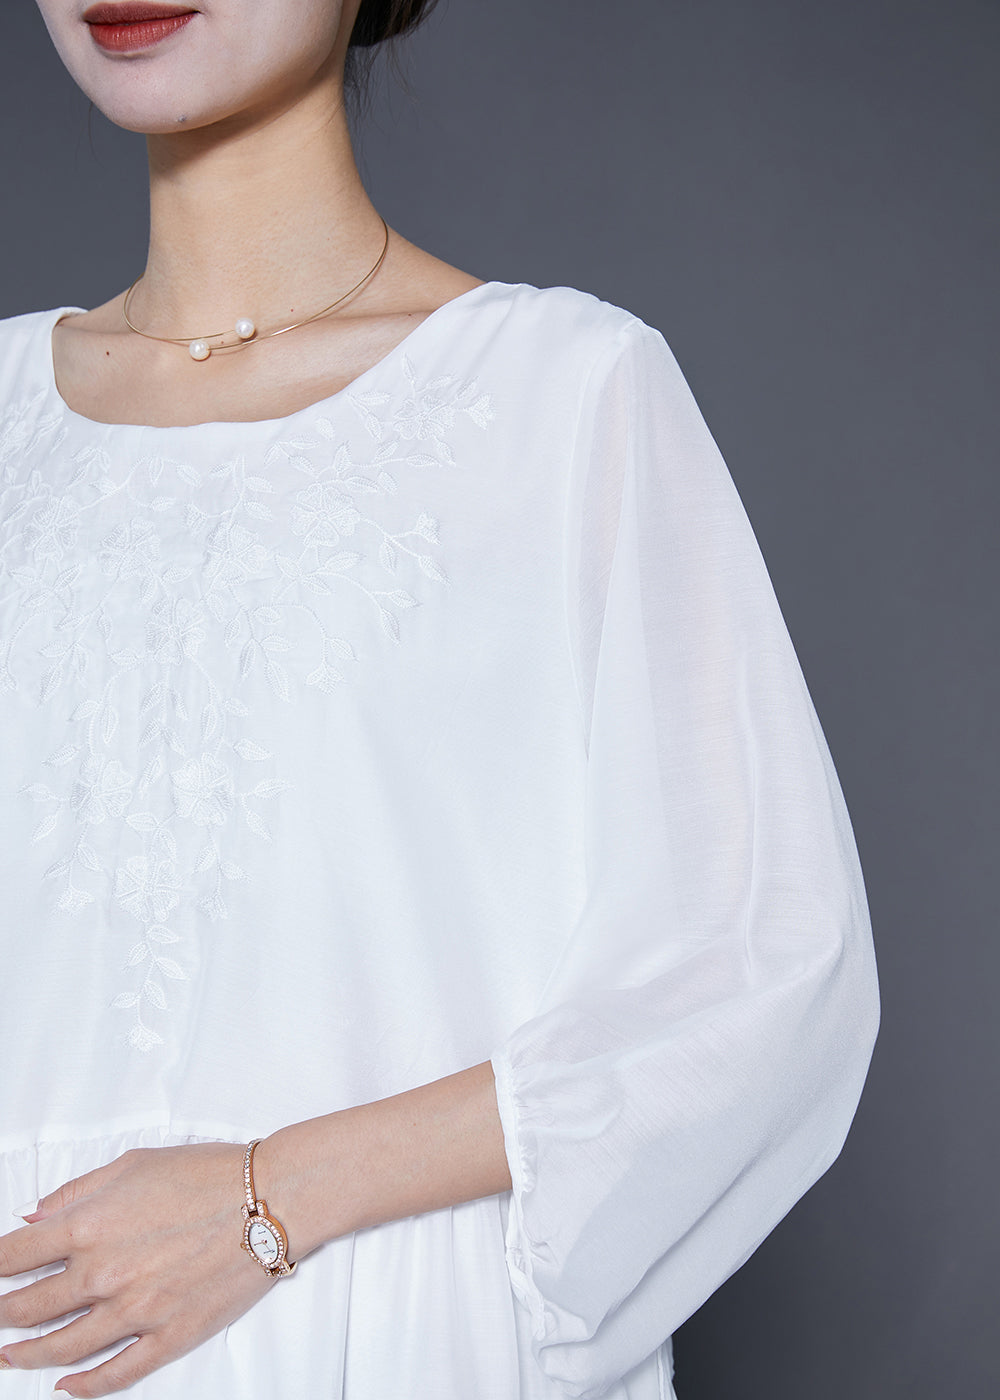 Boho White Embroideried Oversized Cotton Dress Lantern Sleeve